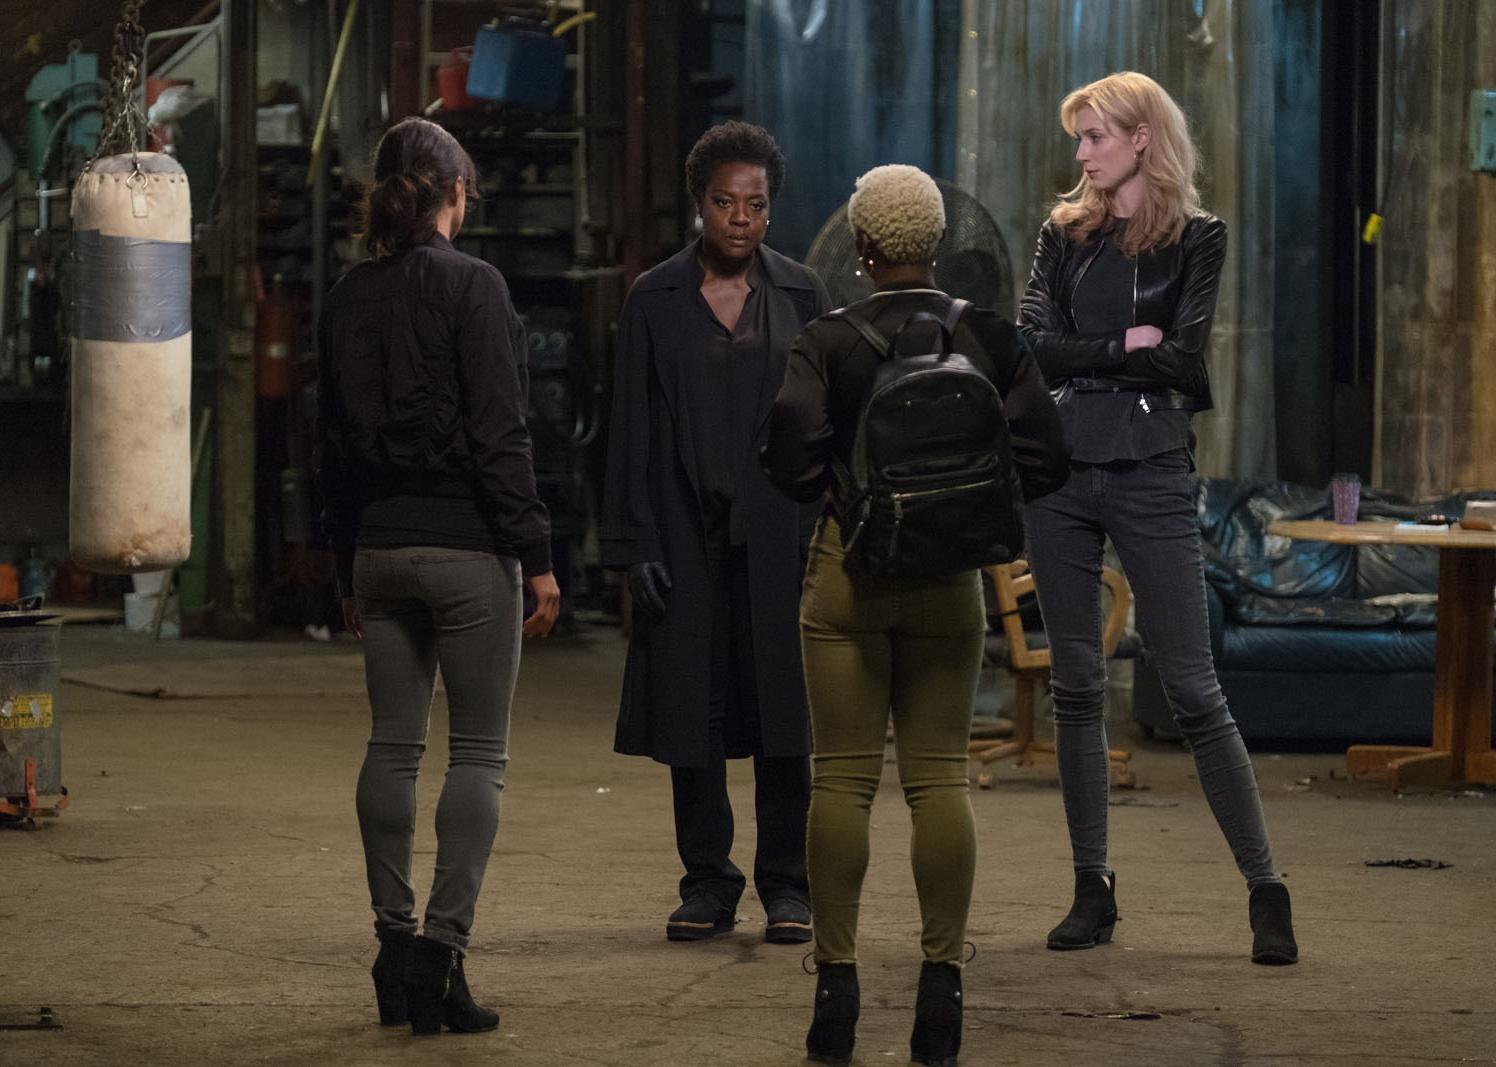 Viola Davis, Michelle Rodriguez, Elizabeth Debicki, and Cynthia Erivo all dressed in dark colors standing in a warehouse.